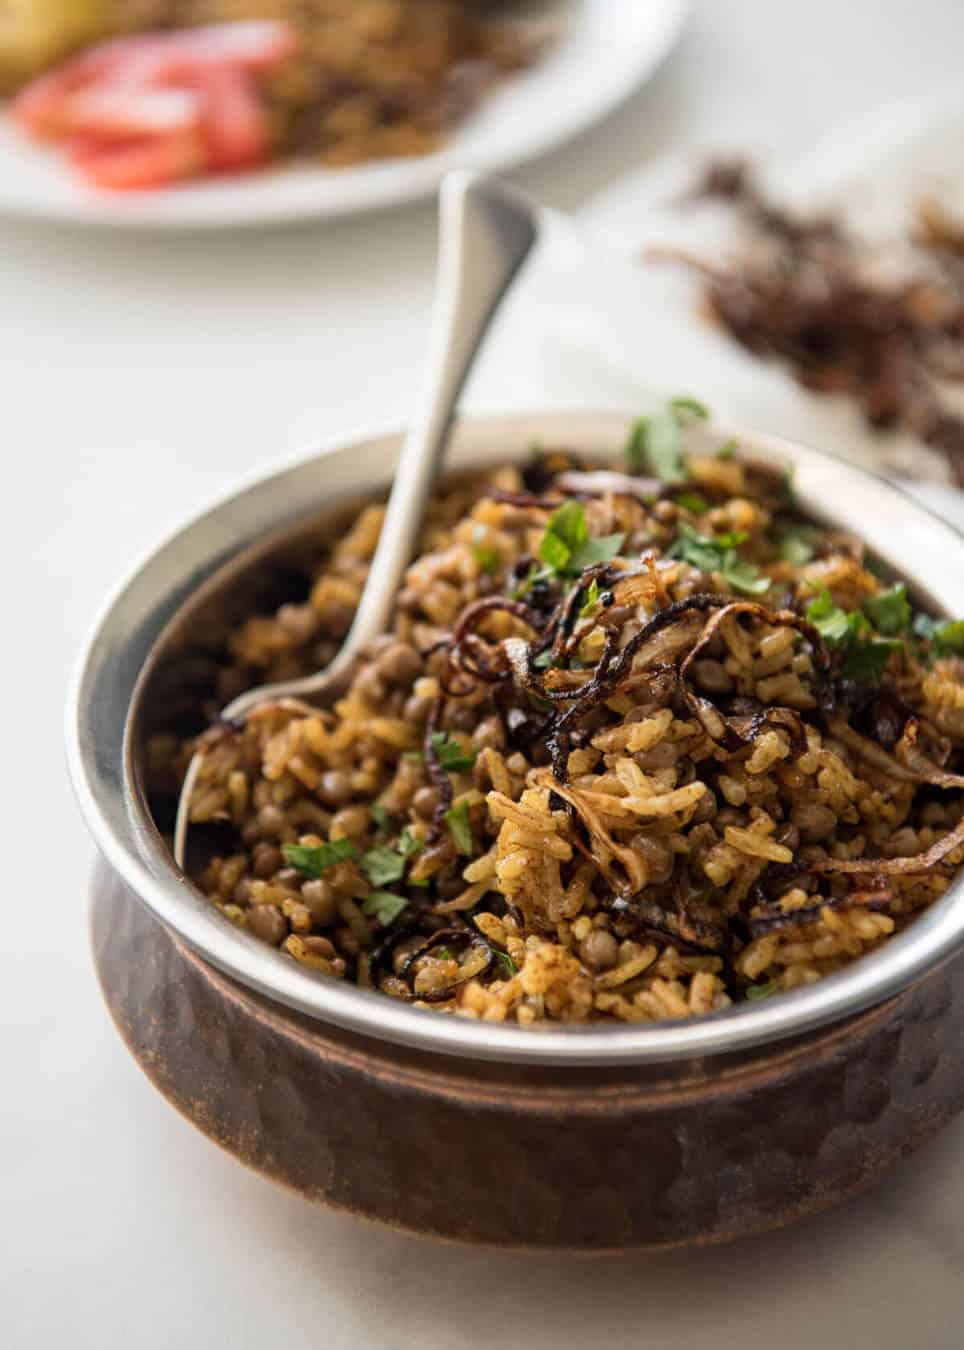 Mejadra -一种芳香的中东大米和扁豆肉饭。Yotam Ottolenghi的食谱。reporetineats.com.